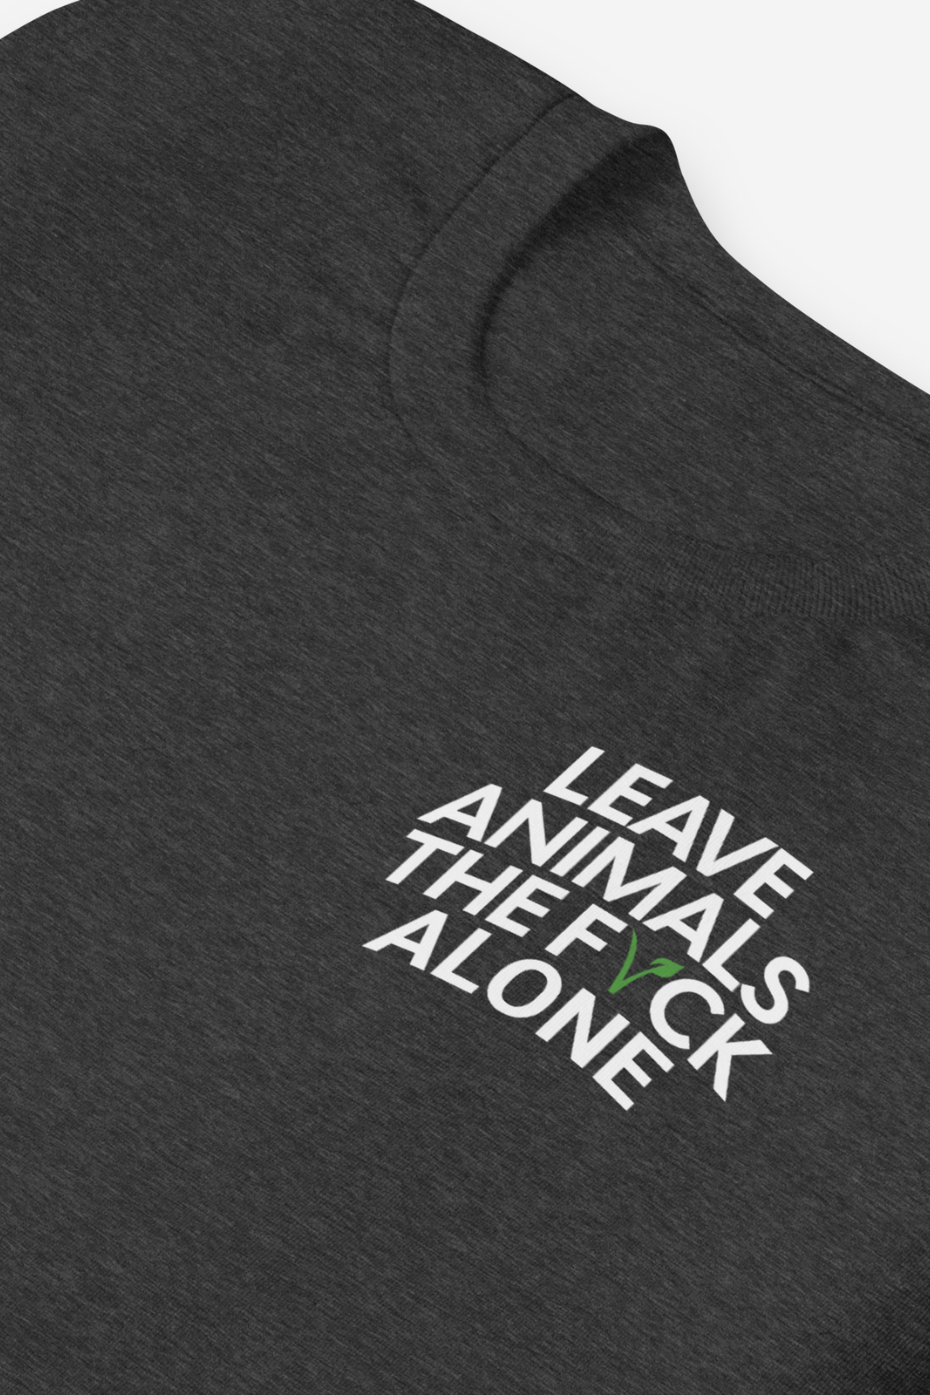 Leave Animals Alone Unisex t-shirt